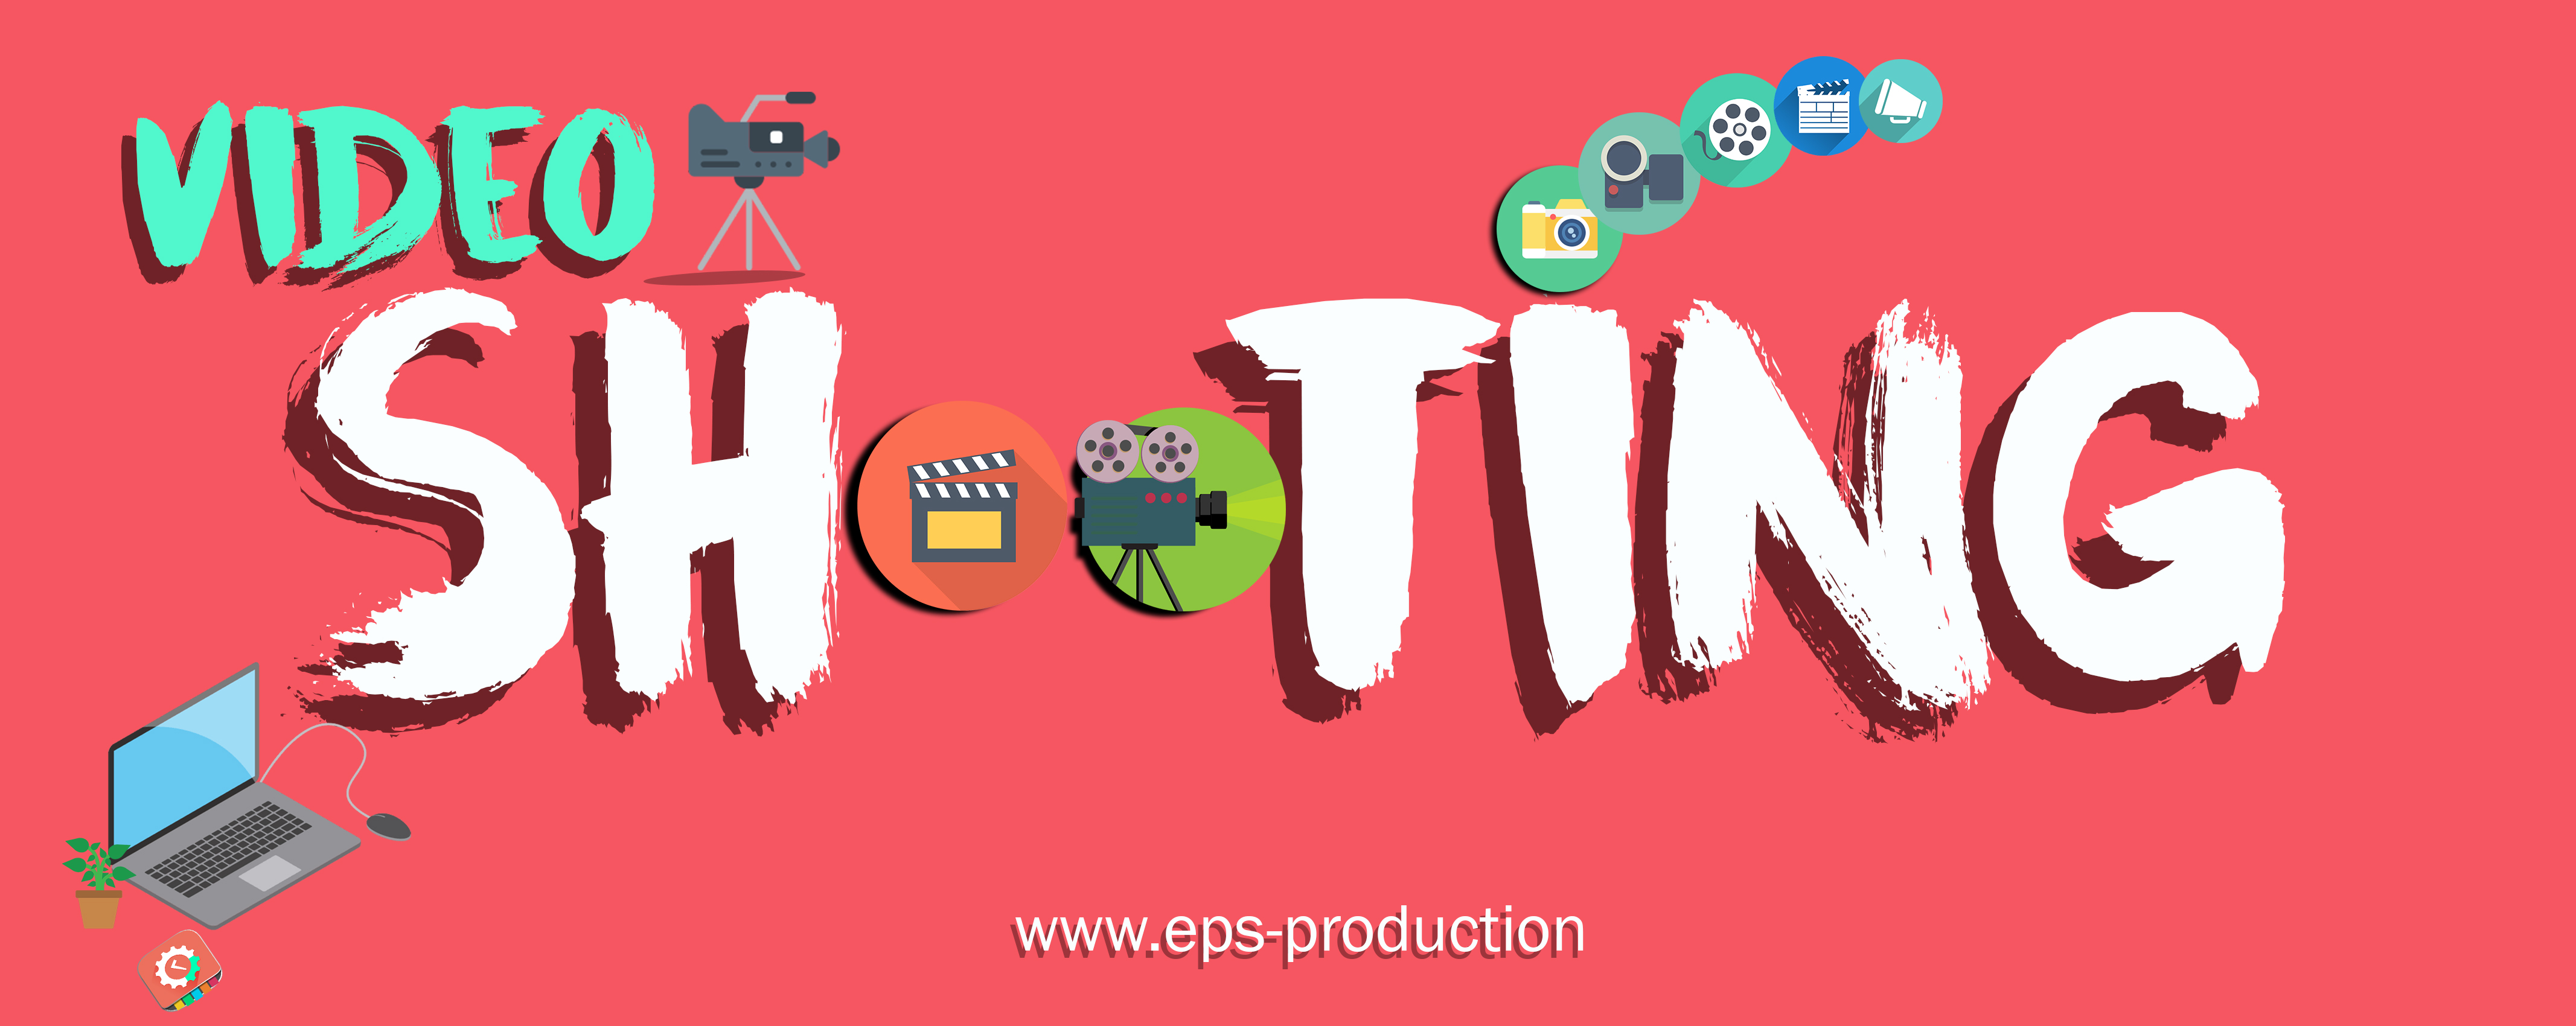 Jasa Video Shooting eps-production